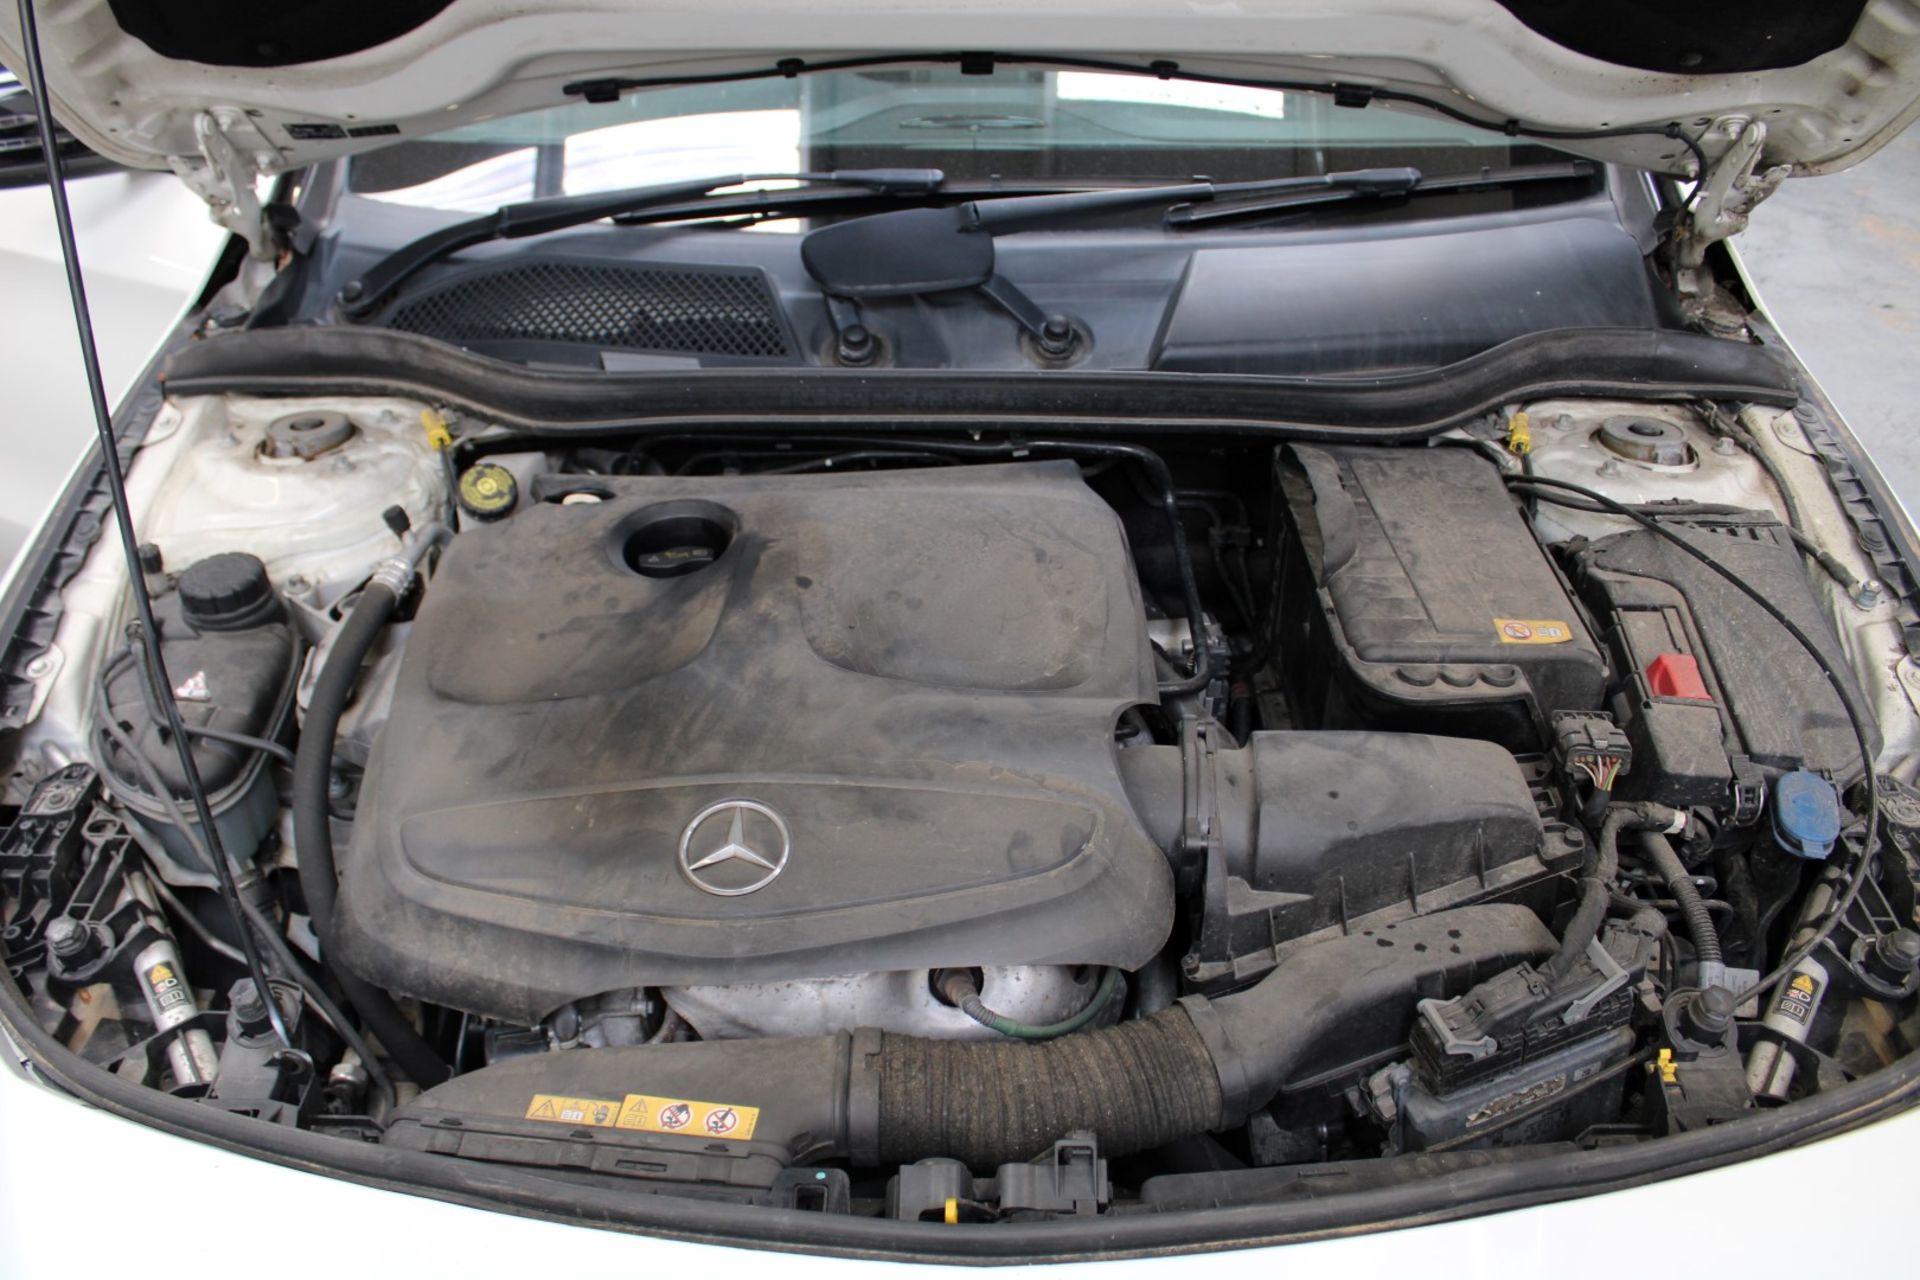 64 15 Mercedes CLA180 AMG Sport Auto - Image 7 of 30